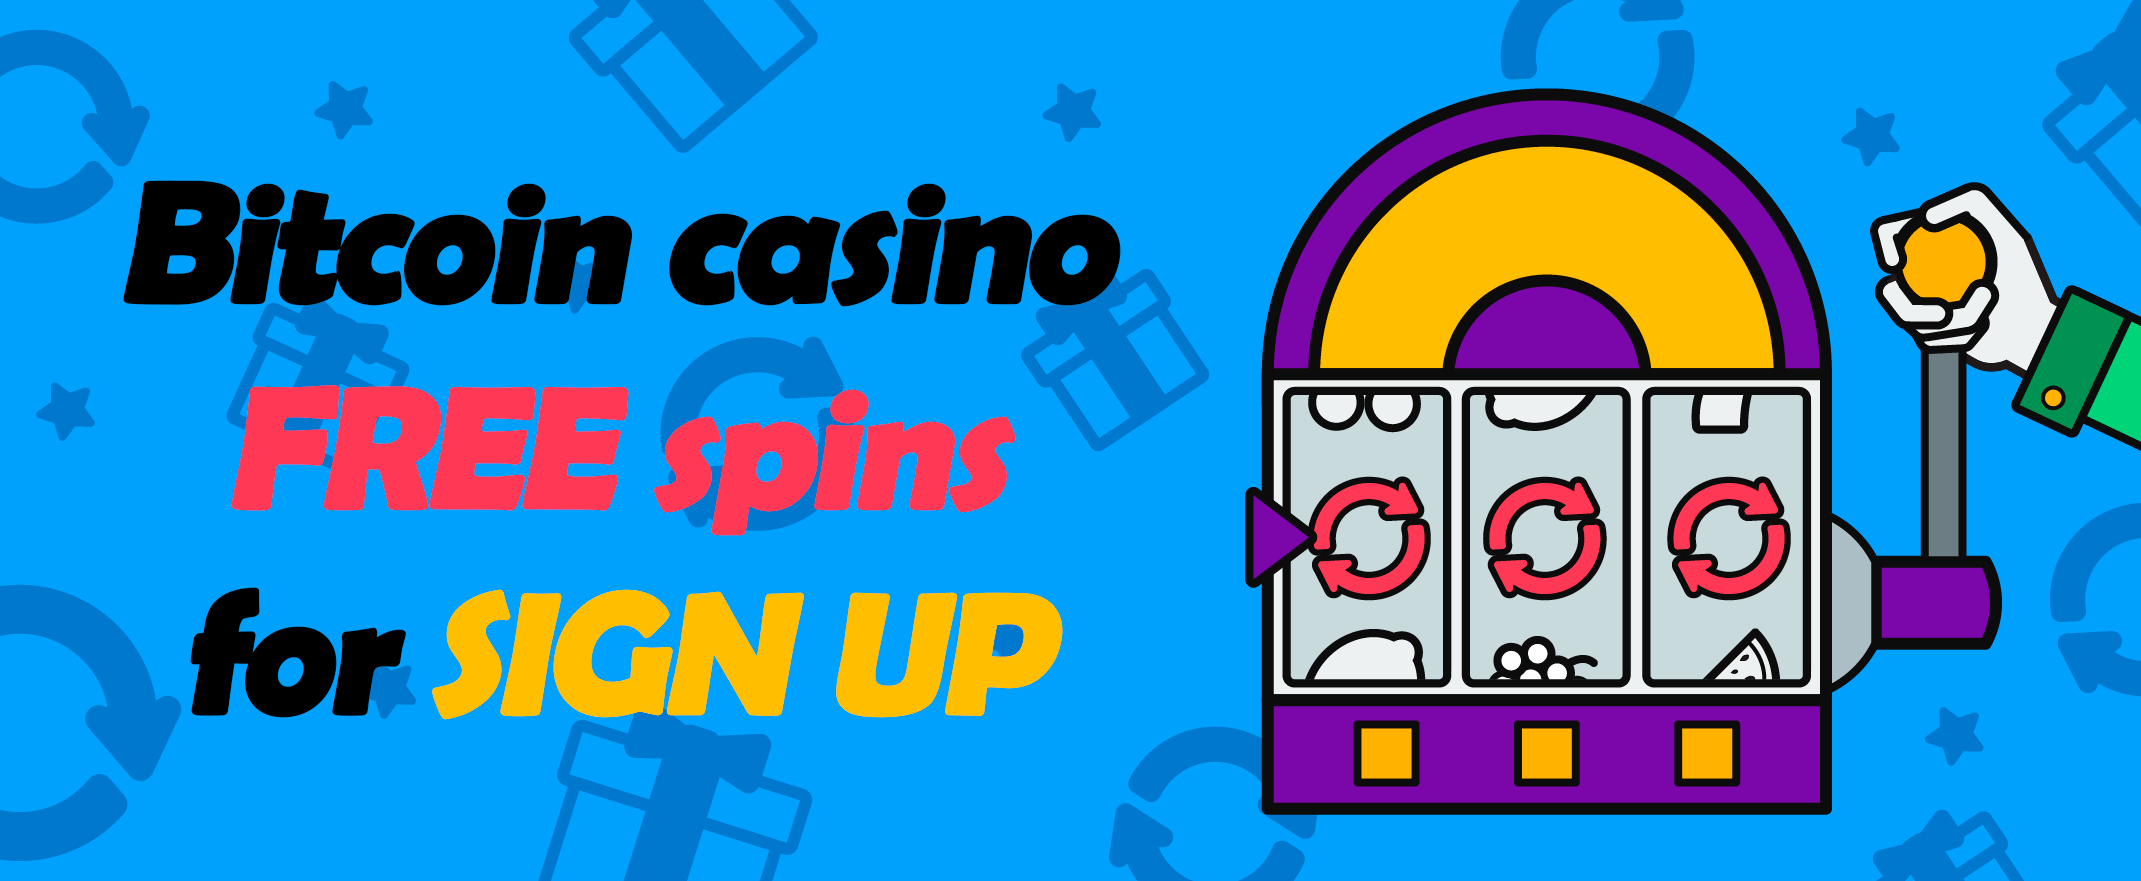 btc casino free spins